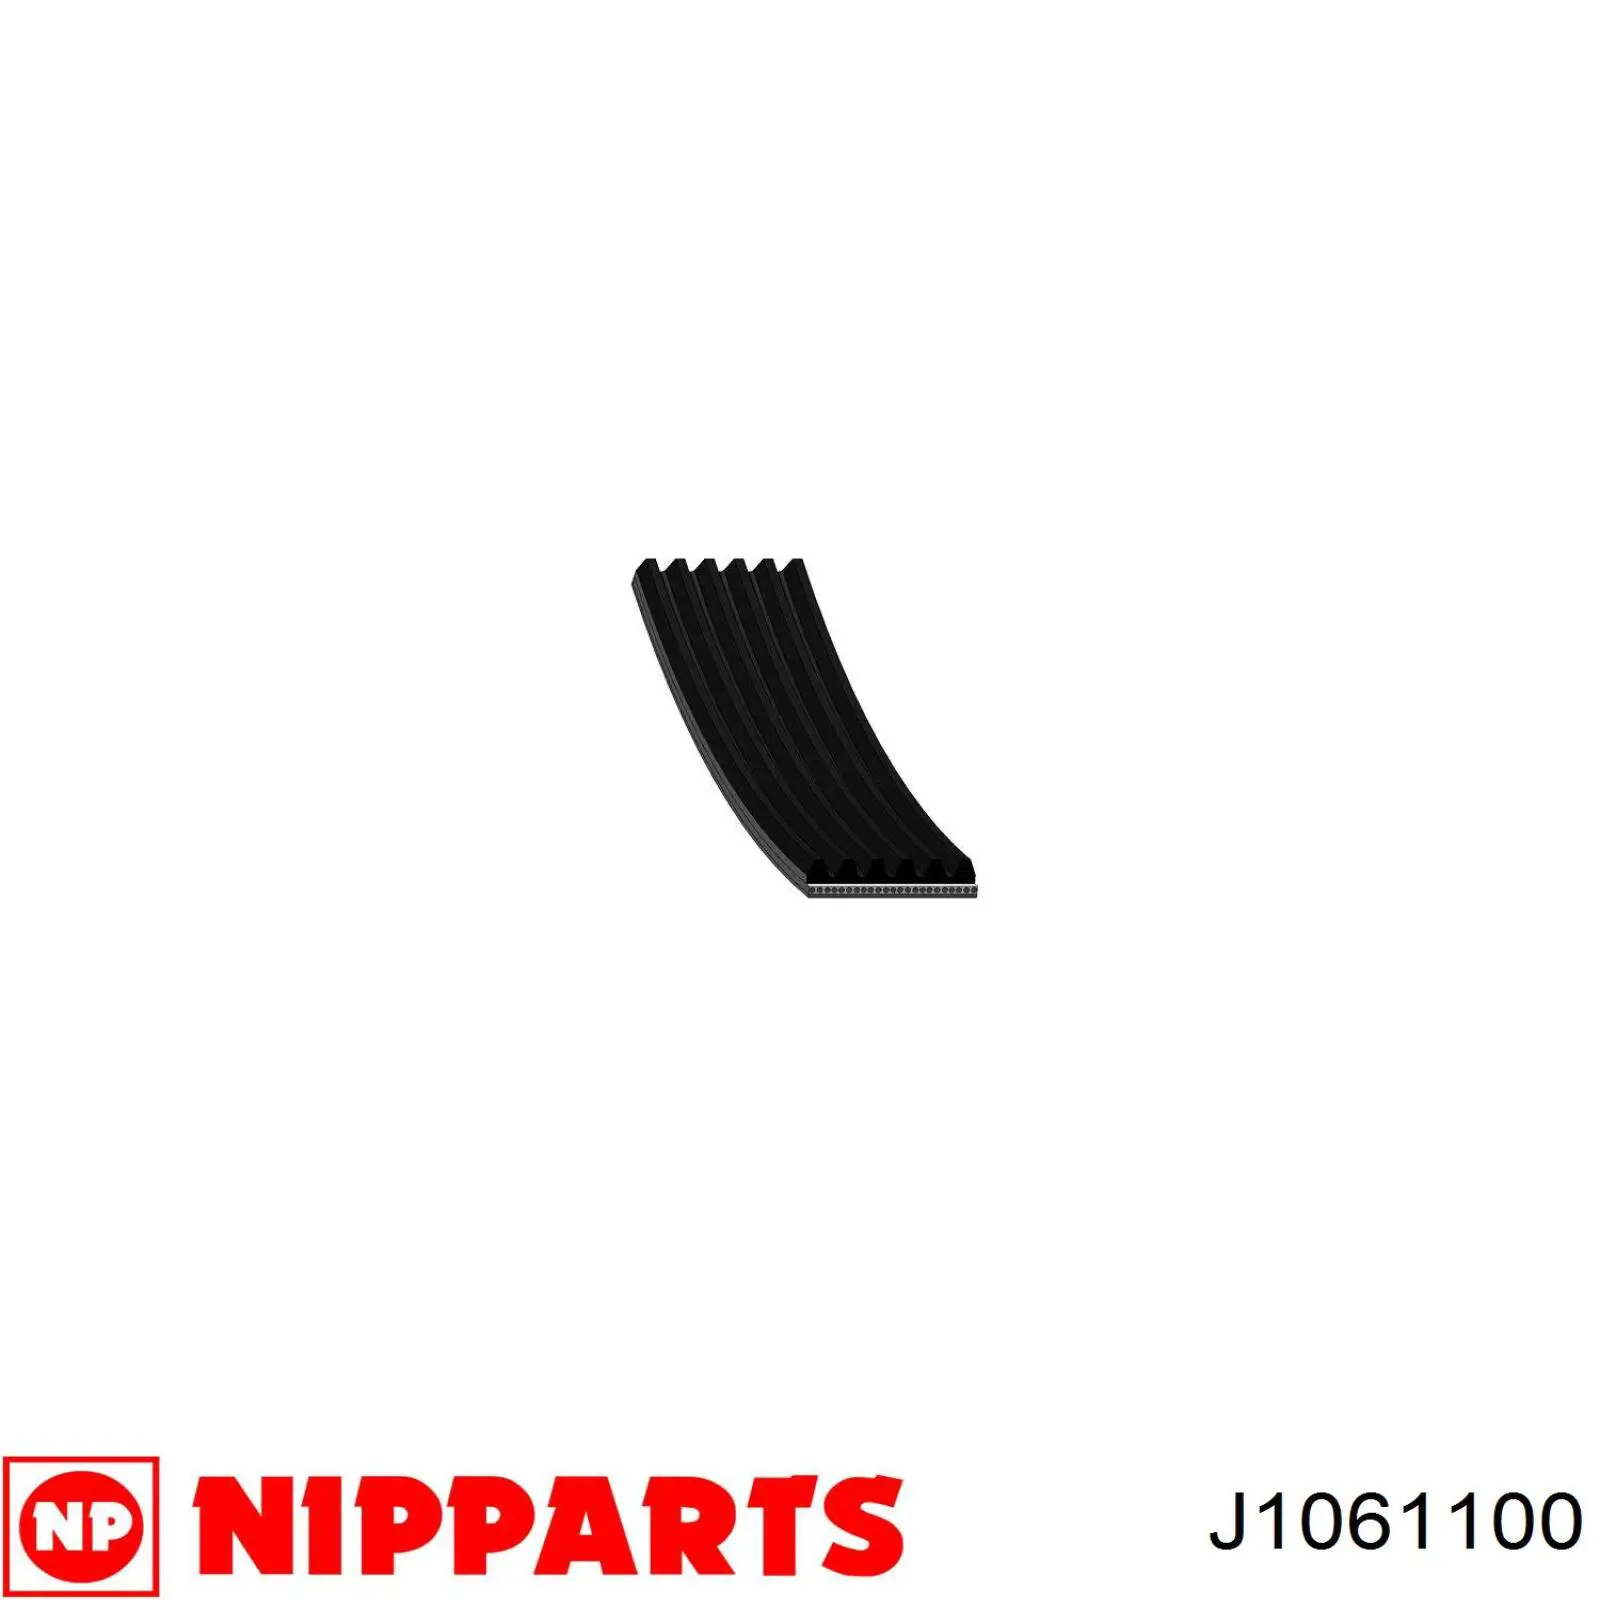 J1061100 Nipparts correa trapezoidal